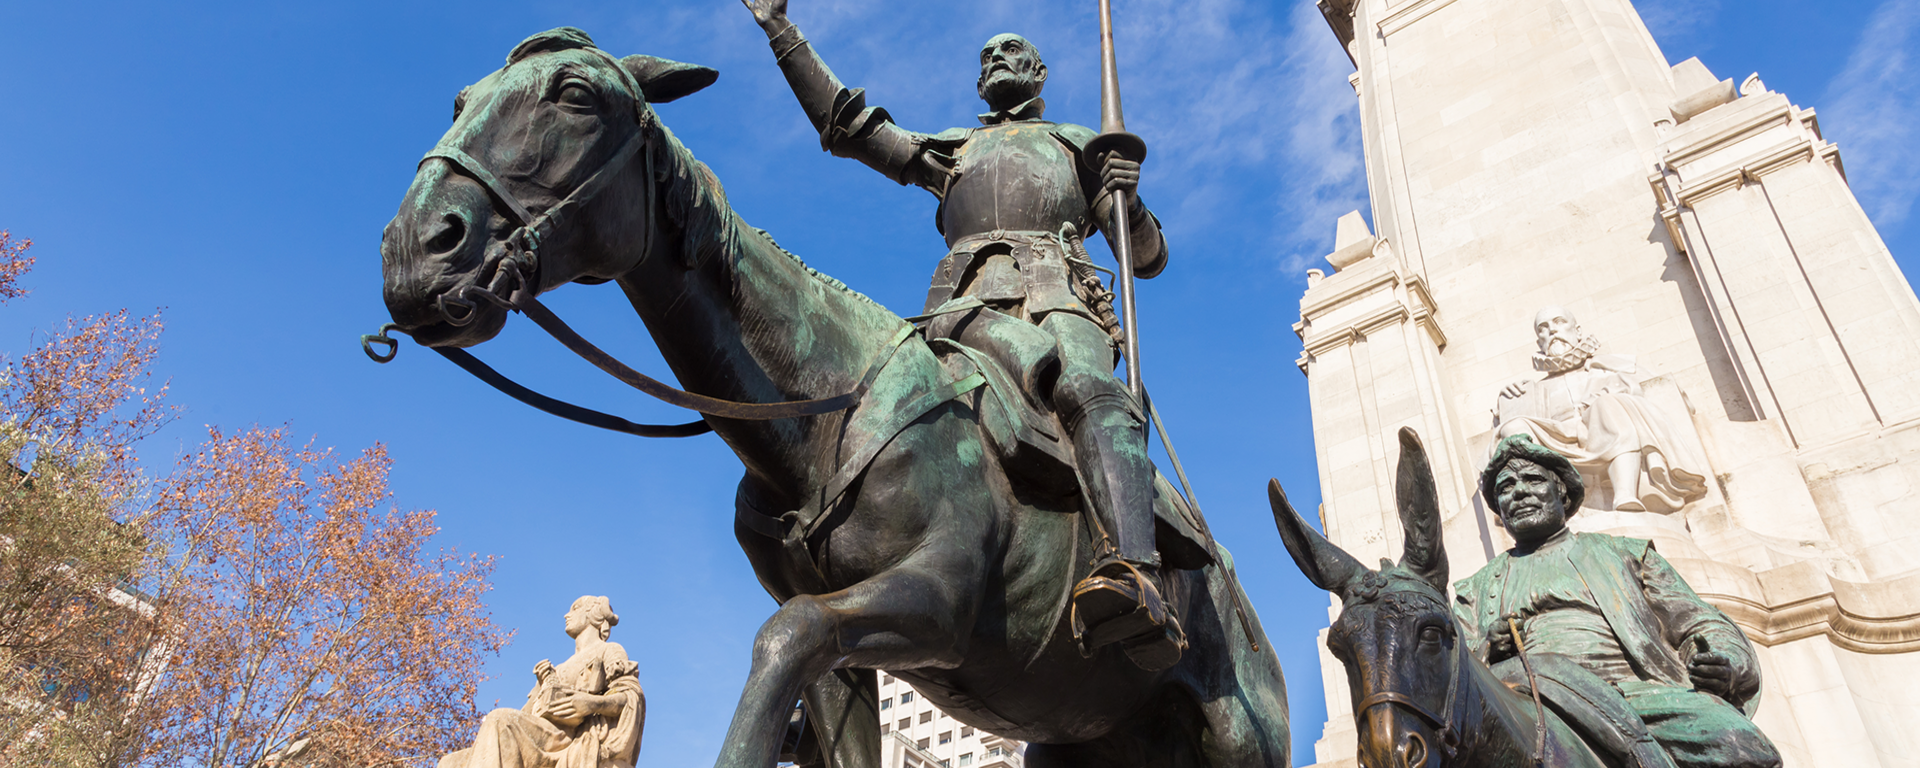 Stone statue of Miguel de Cervantes and bronze sculptures of Don Quixote and Sancho Panza on the Square of Spain (Plaza de Espana) in Madrid.